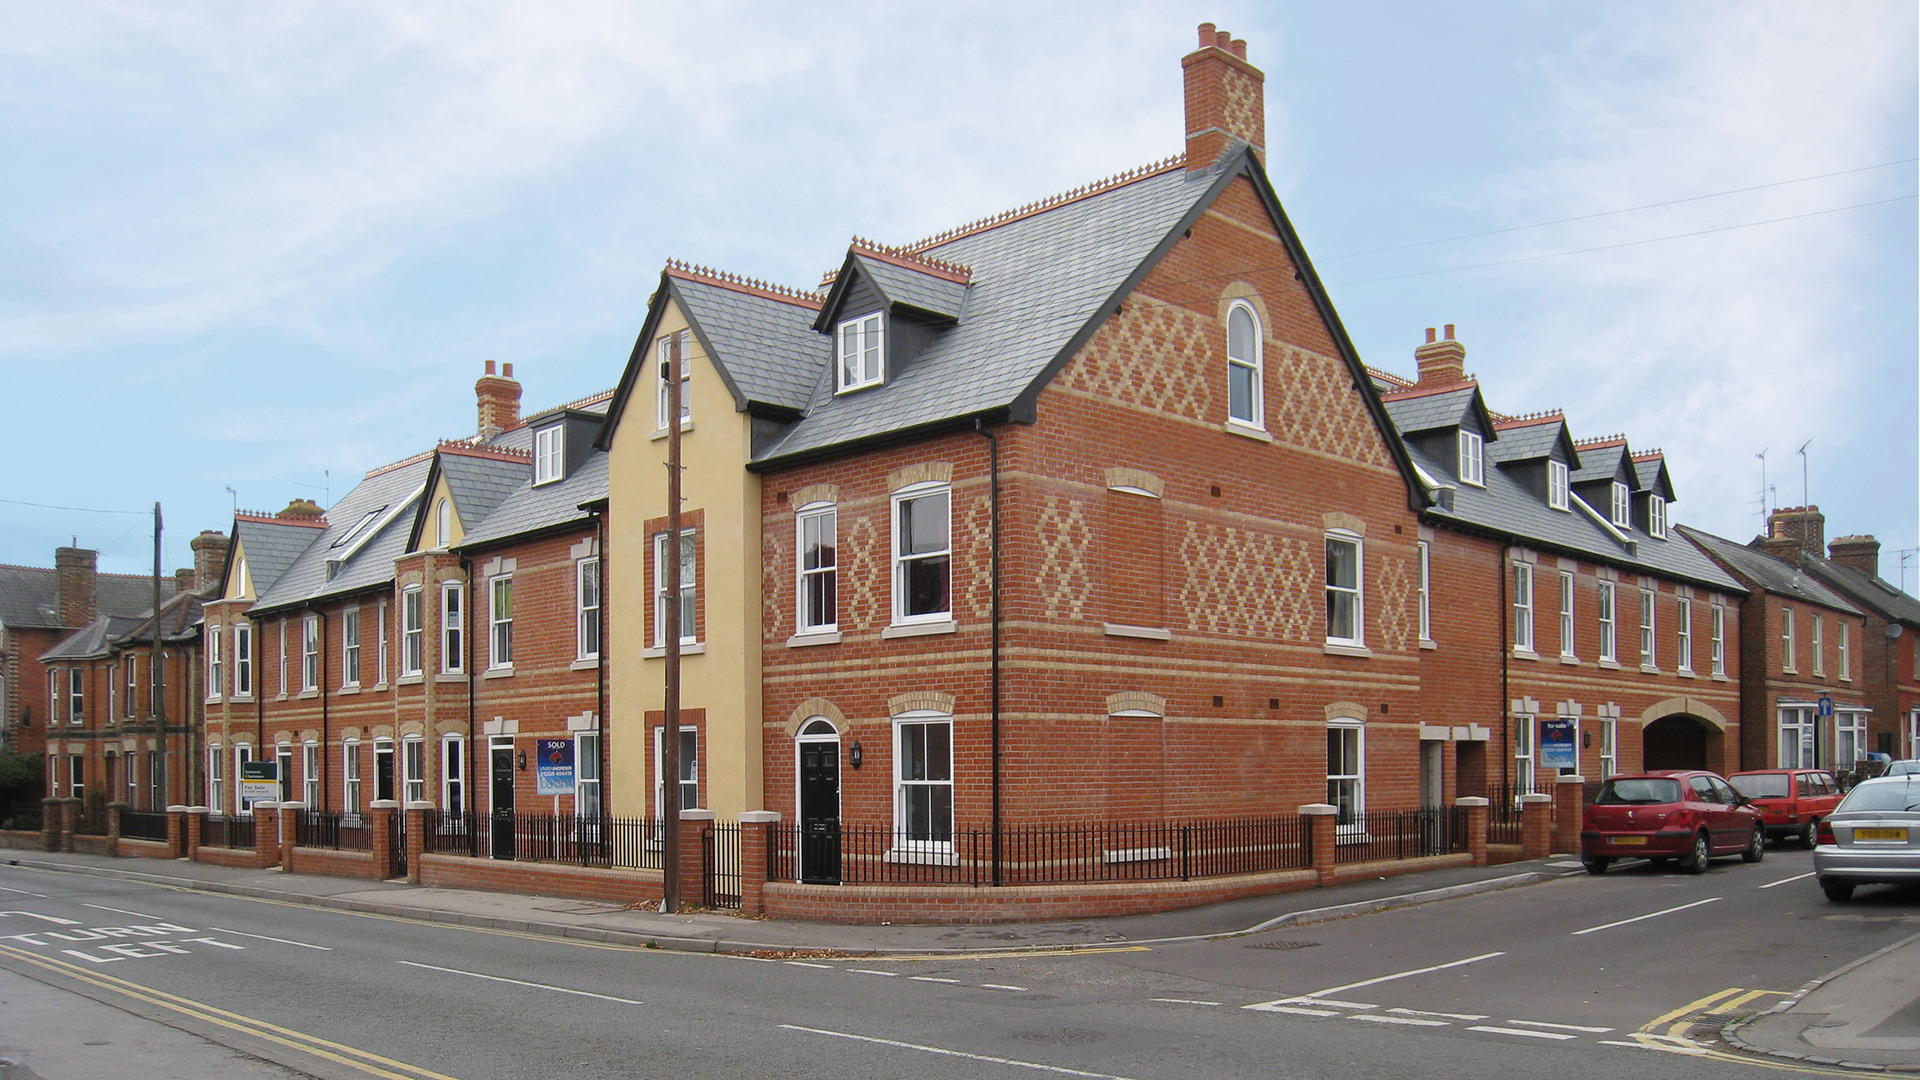 Attractive brick townhouses on corner of road